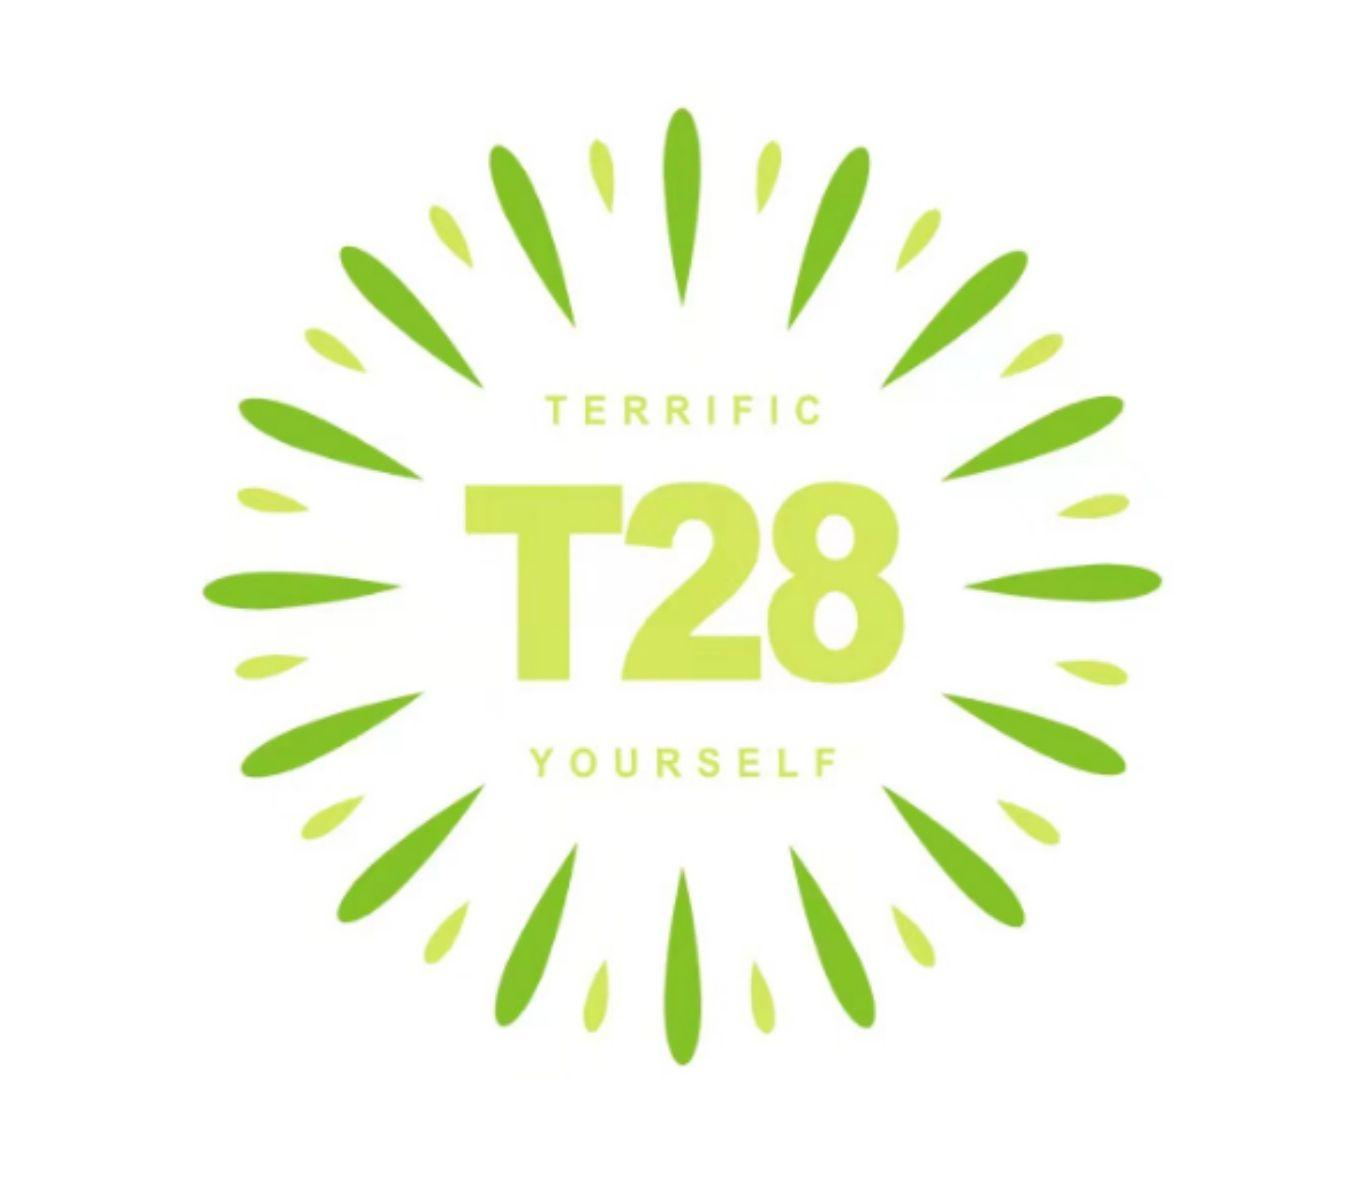 T28 TERRIFIC YOURSELF